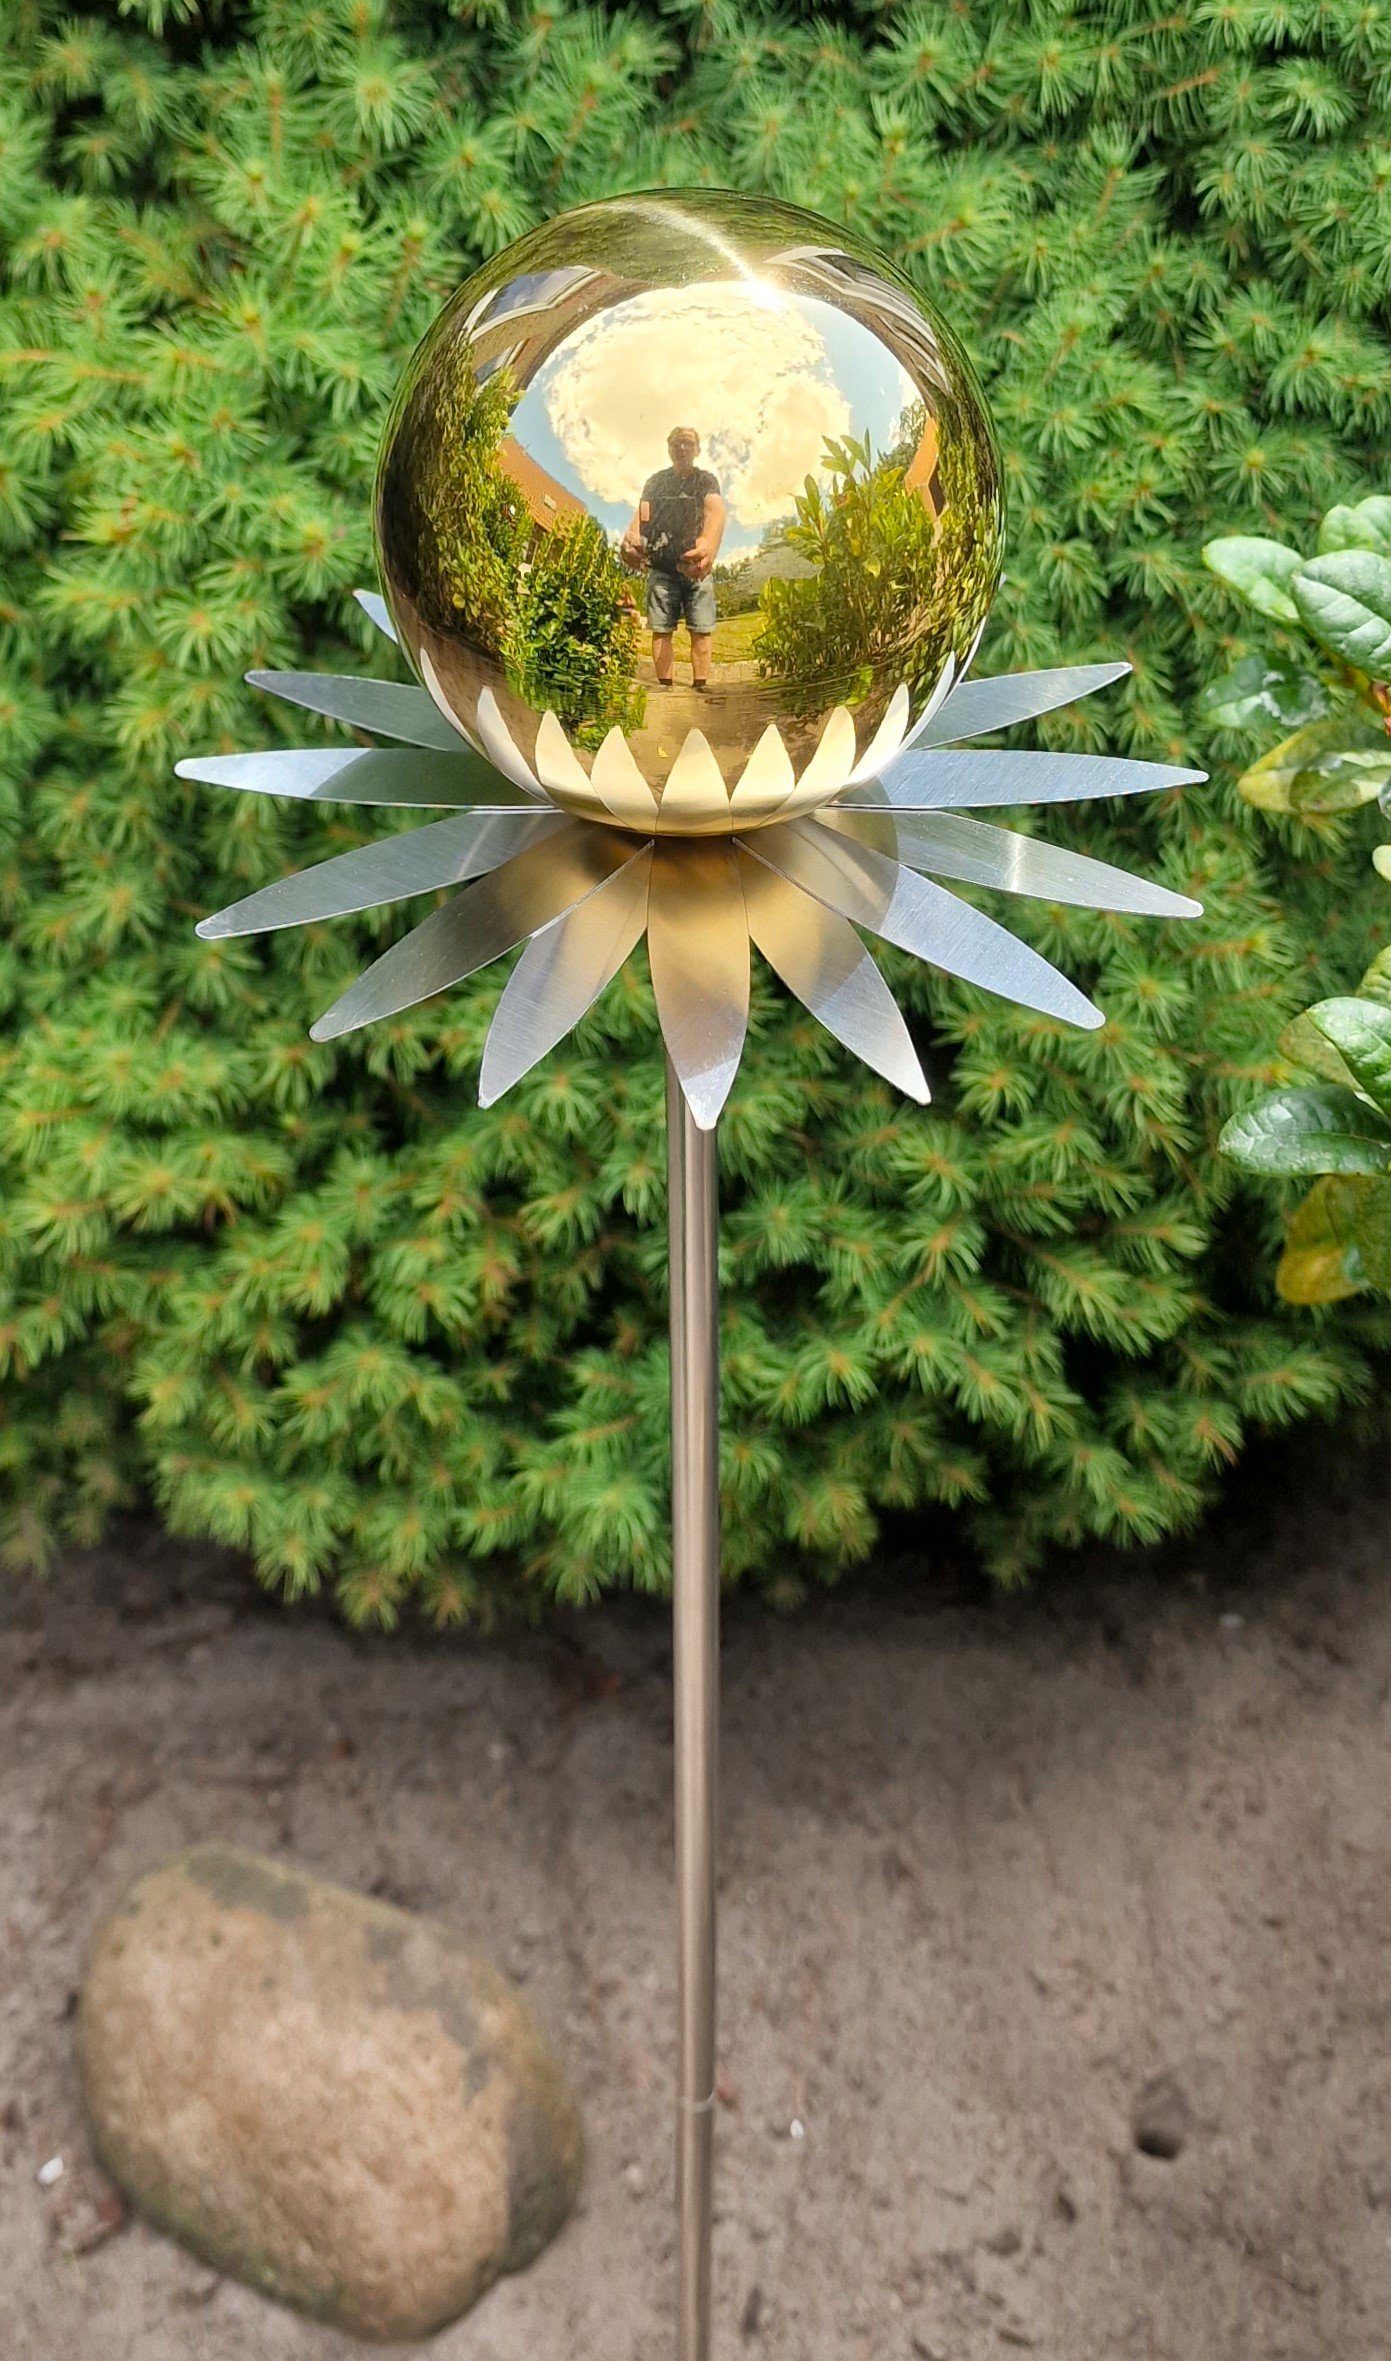 Milano gold Jürgen mit Blütenzauber poliert Rosenkugel 80 Edelstahl Garten-Ambiente cm 10 cm Bocker Stab Garten Gartenstecker